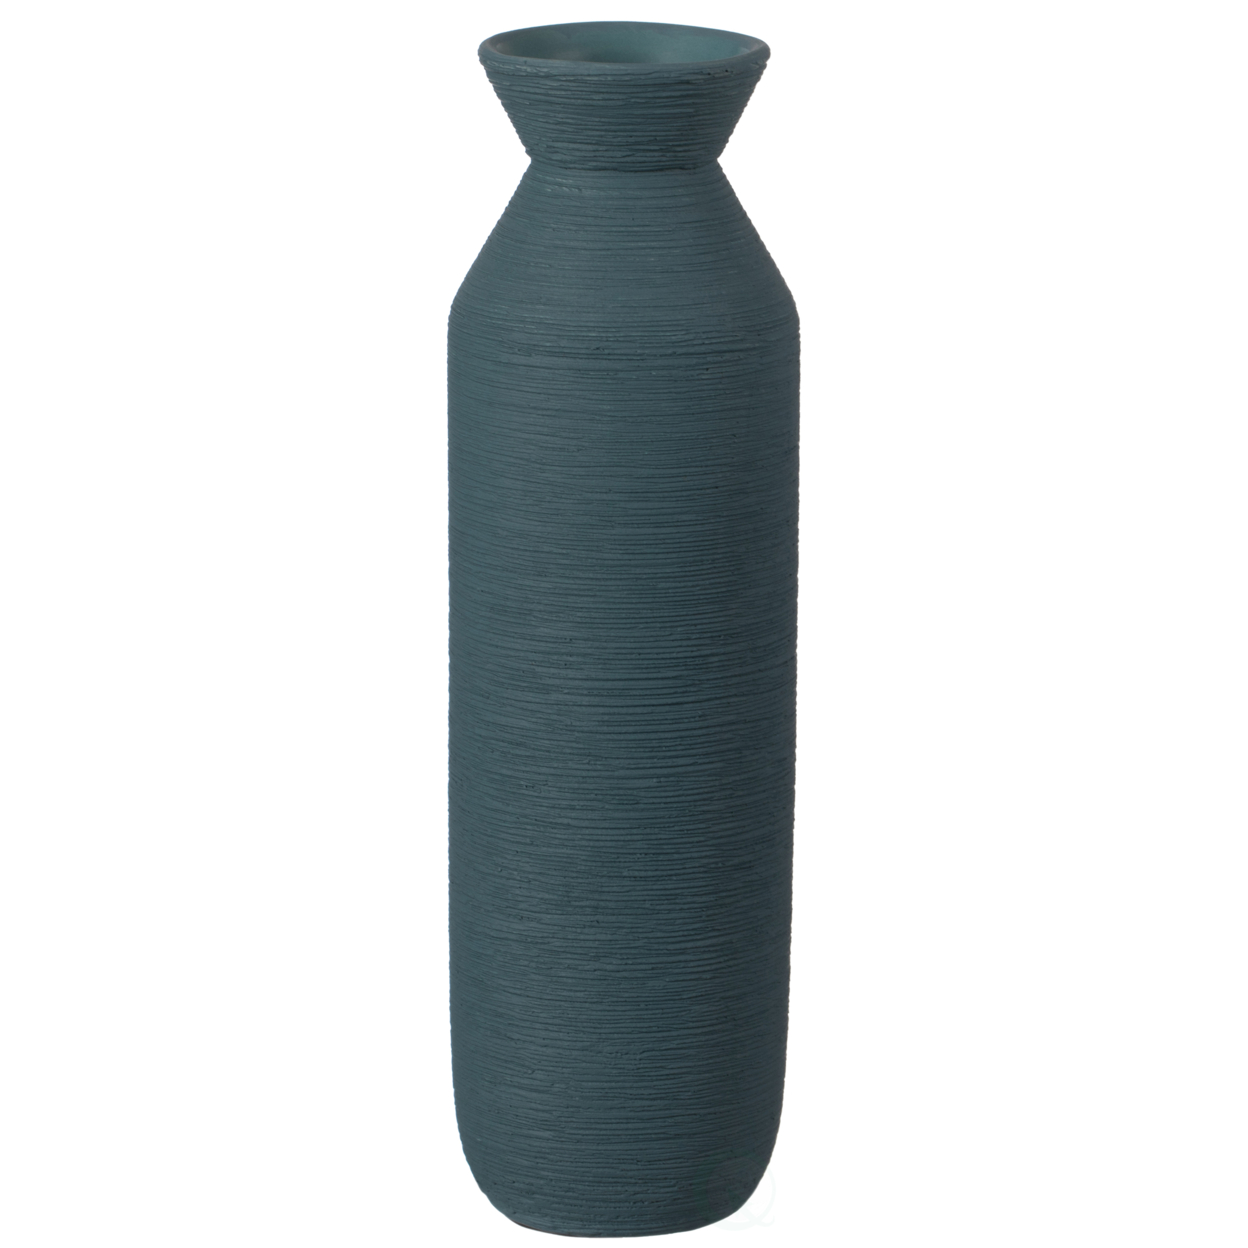 Decorative Ceramic Vase, Modern Style Centerpiece Table Vase - Blue